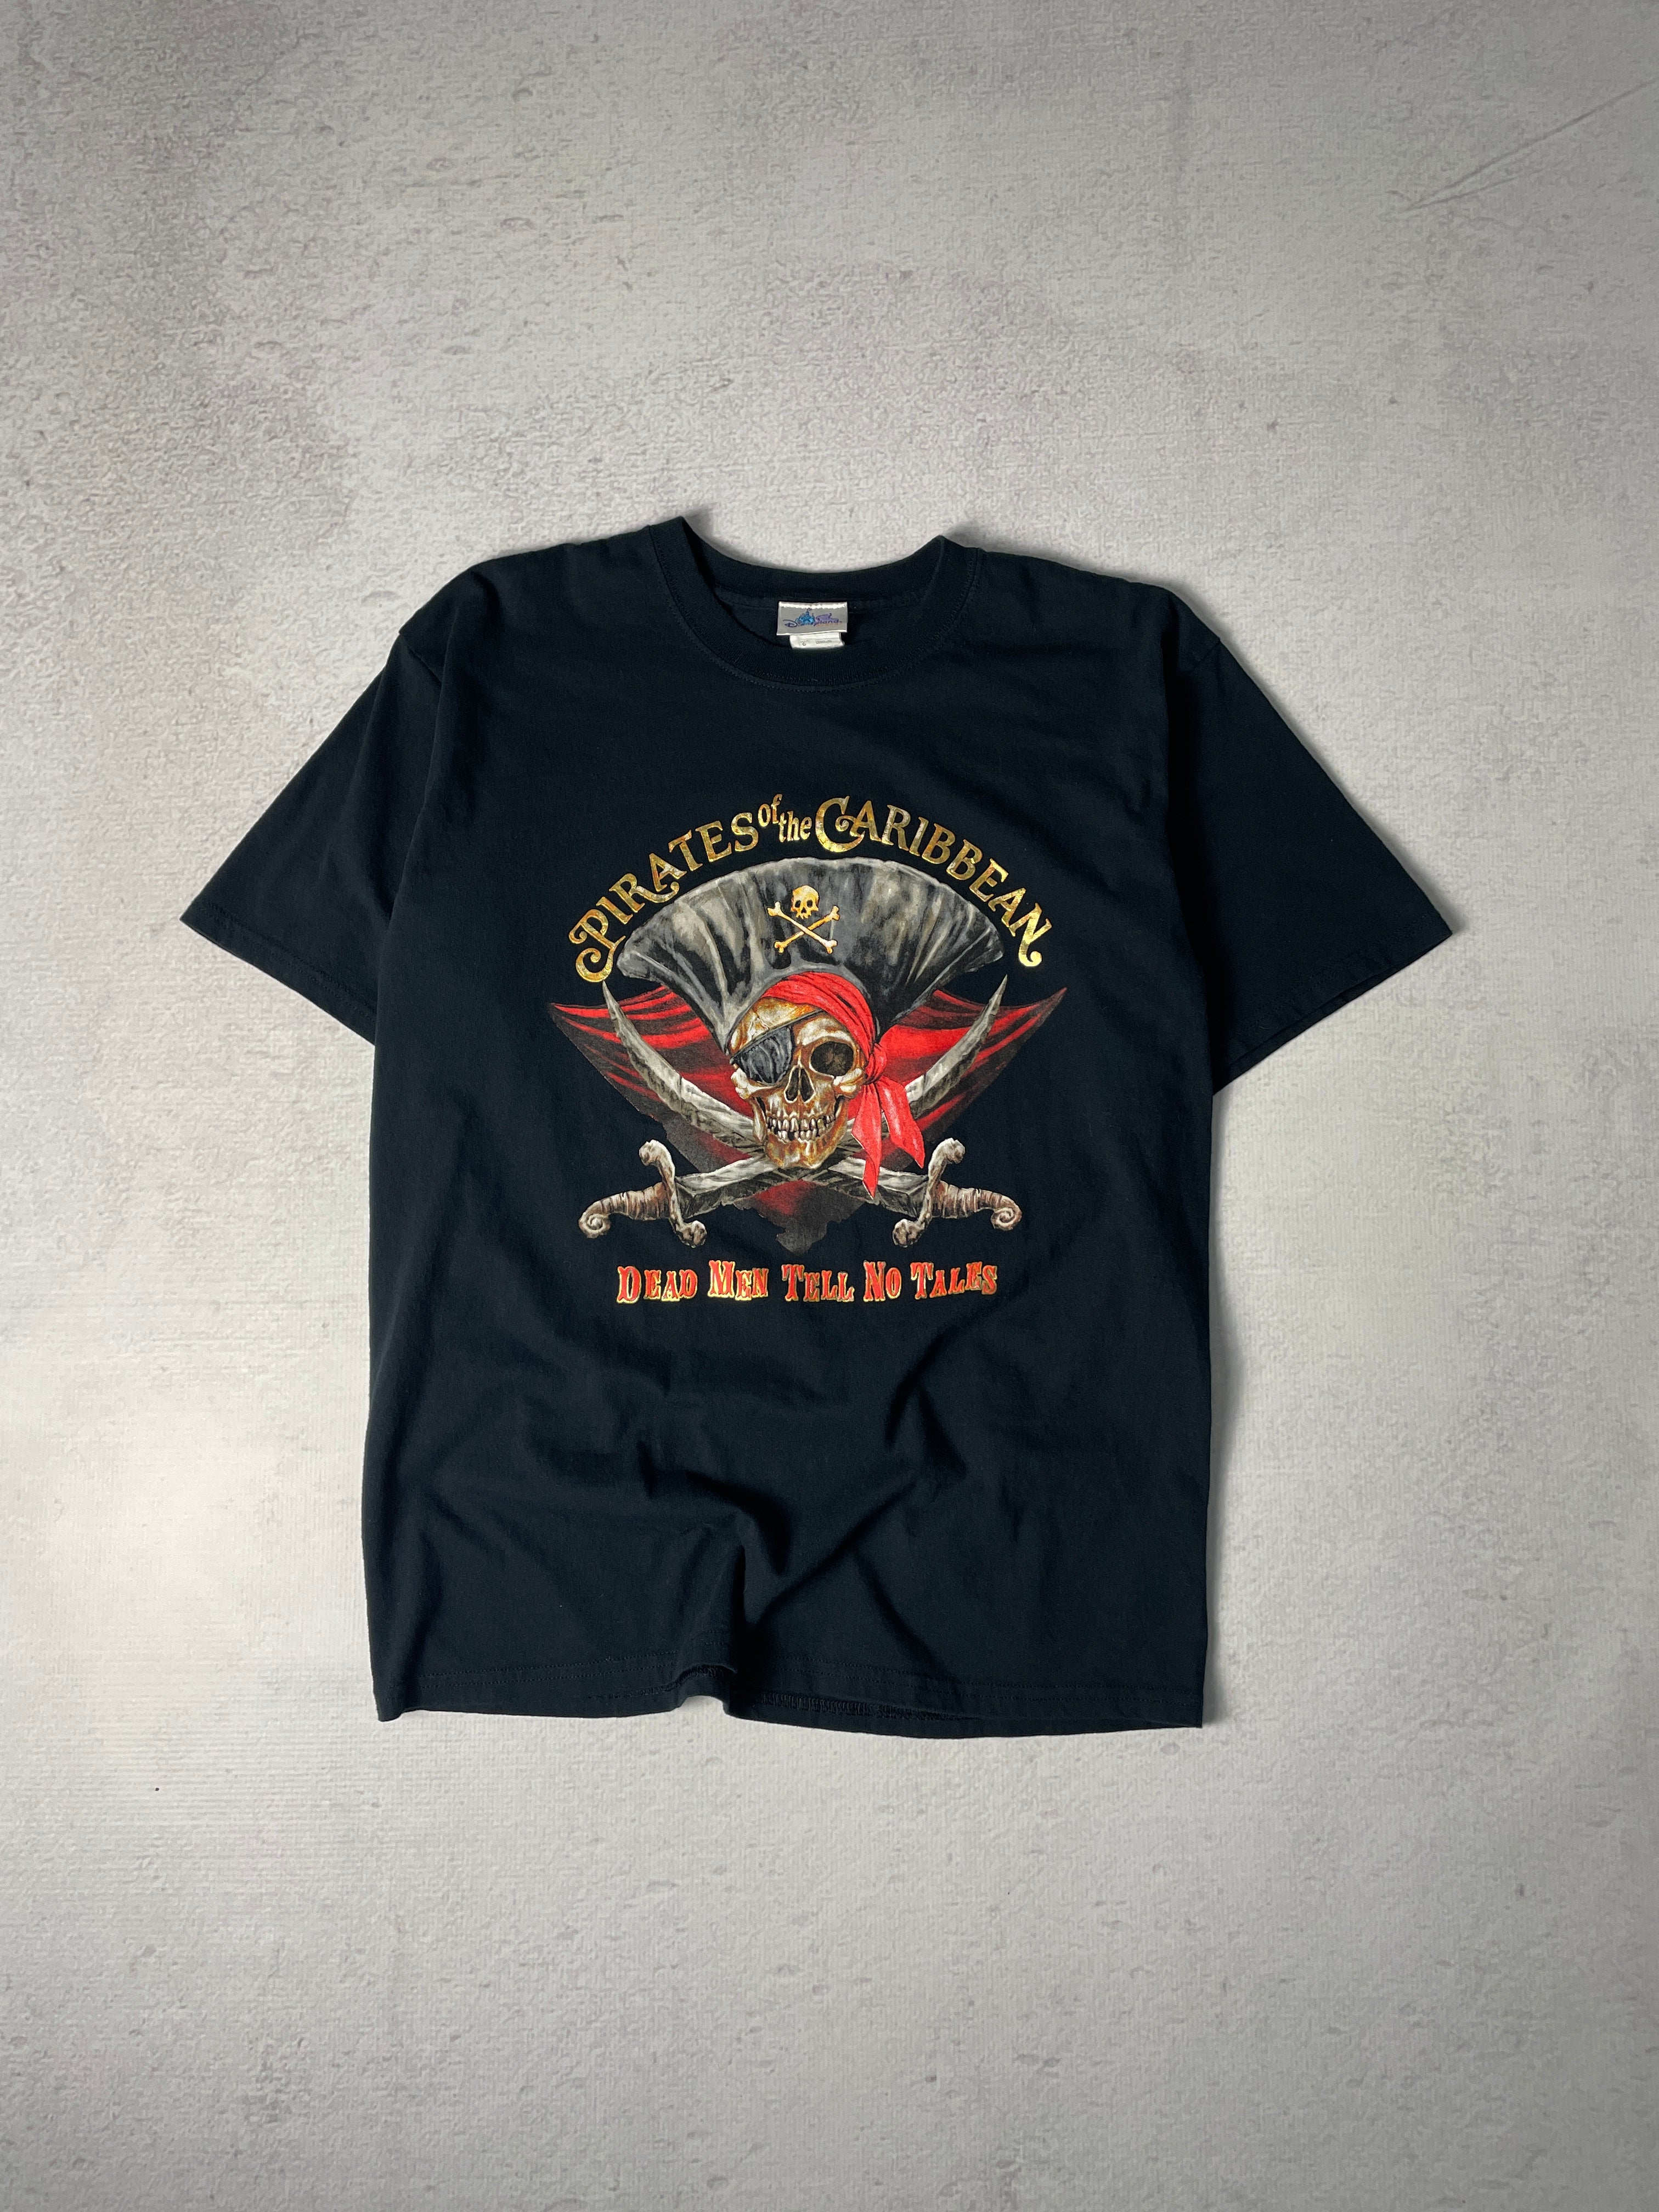 Vintage 90s Disney Pirates of the Caribbean T-Shirt - Men's Large